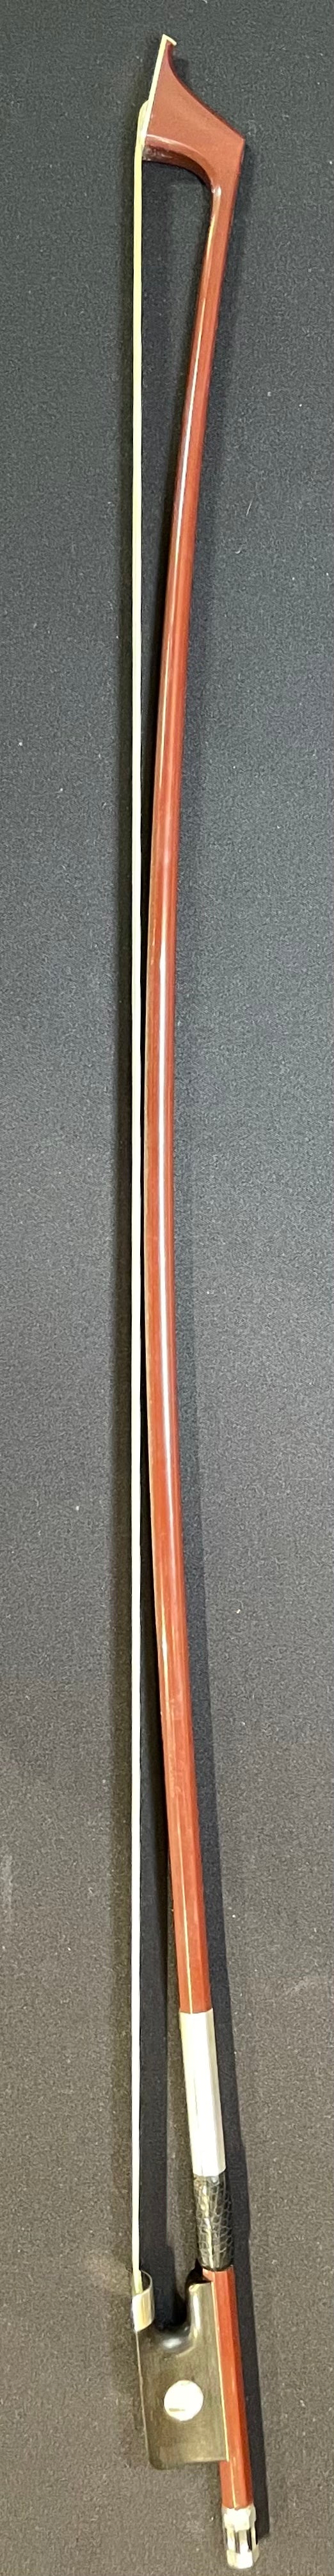 4/4 Cello Bow - Jonpaul Carrera Original Natural Carbon Fiber Model